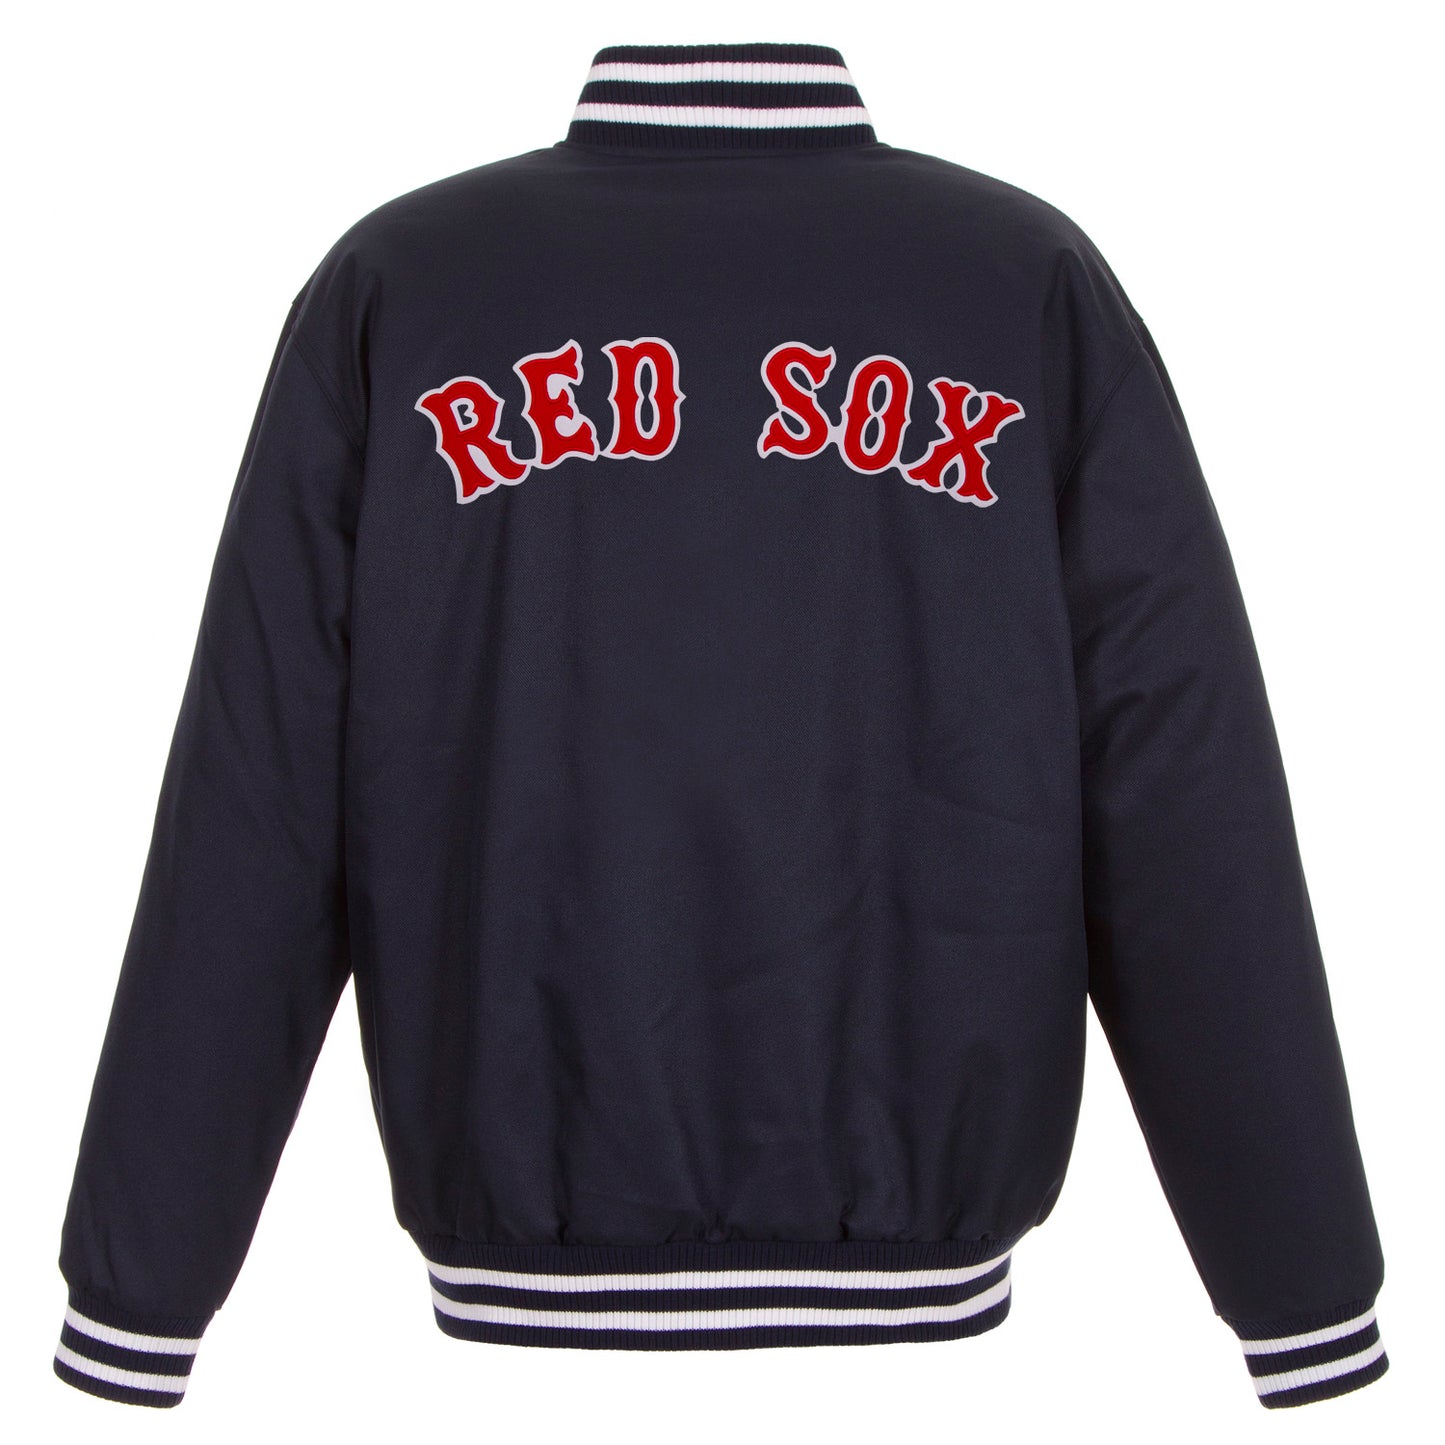 Boston Red Sox Poly-Twill Jacket